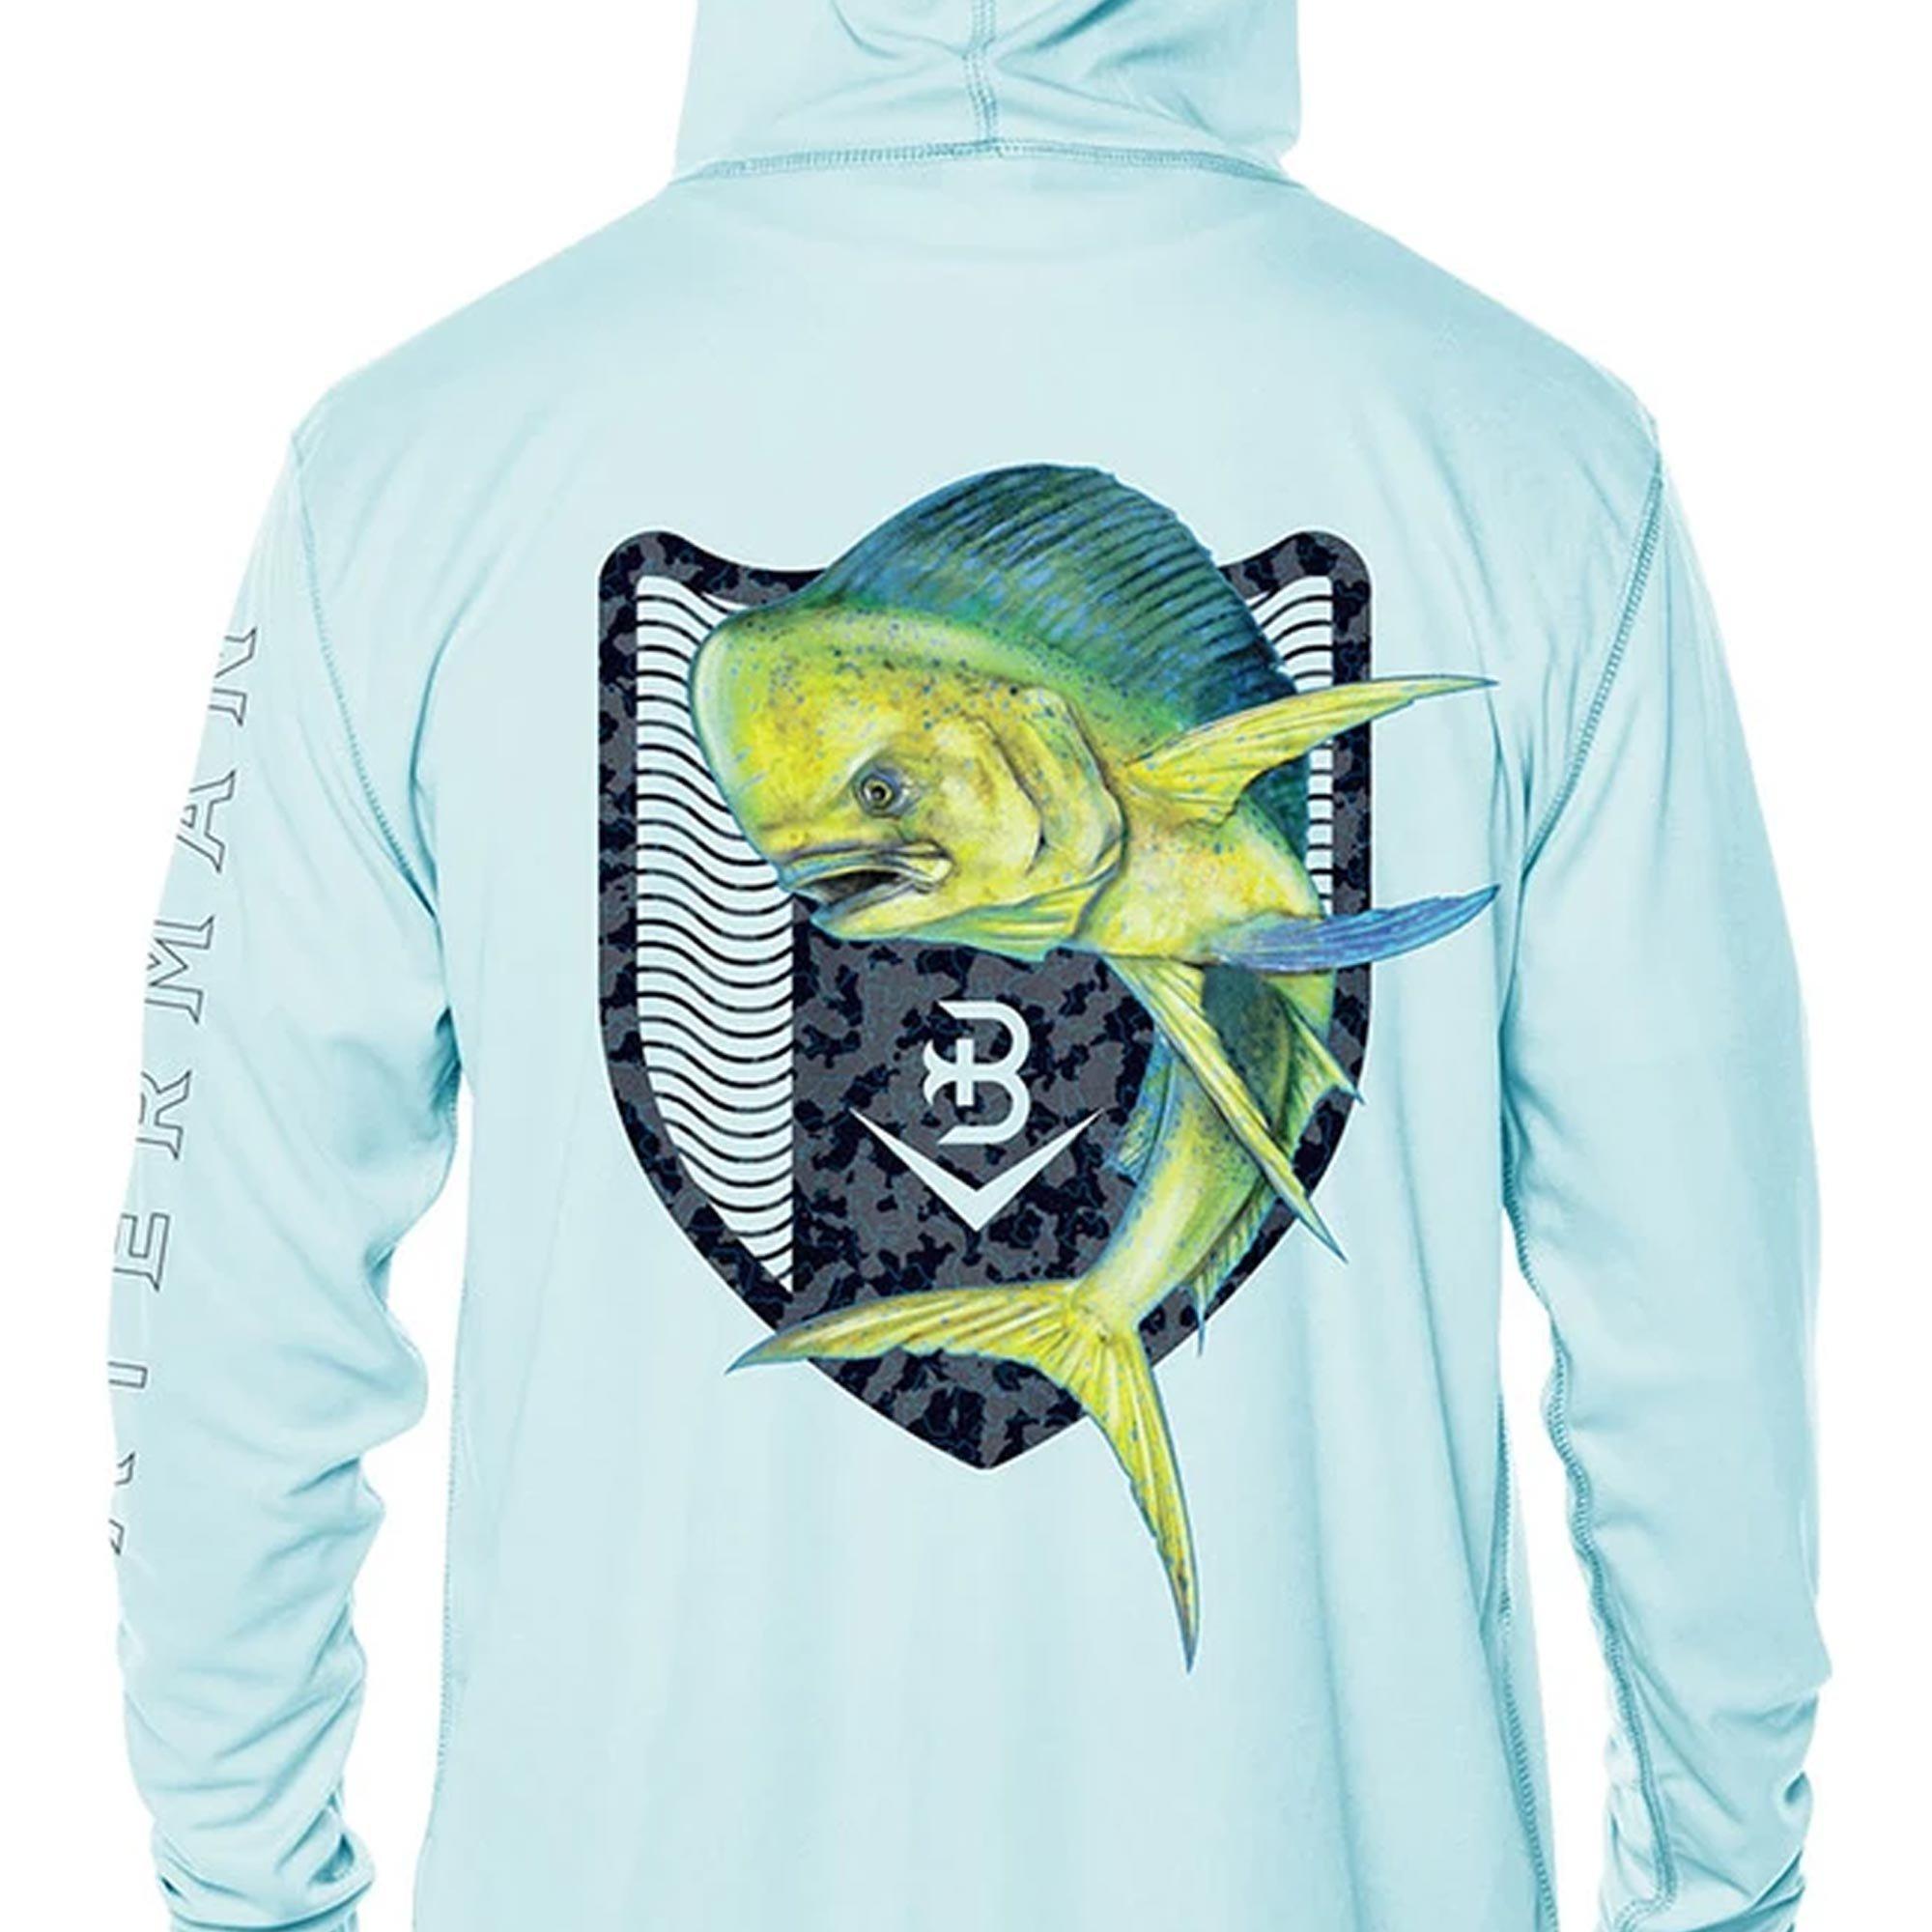 Briny Dually Marlin Mens Performance Fishing Shirt